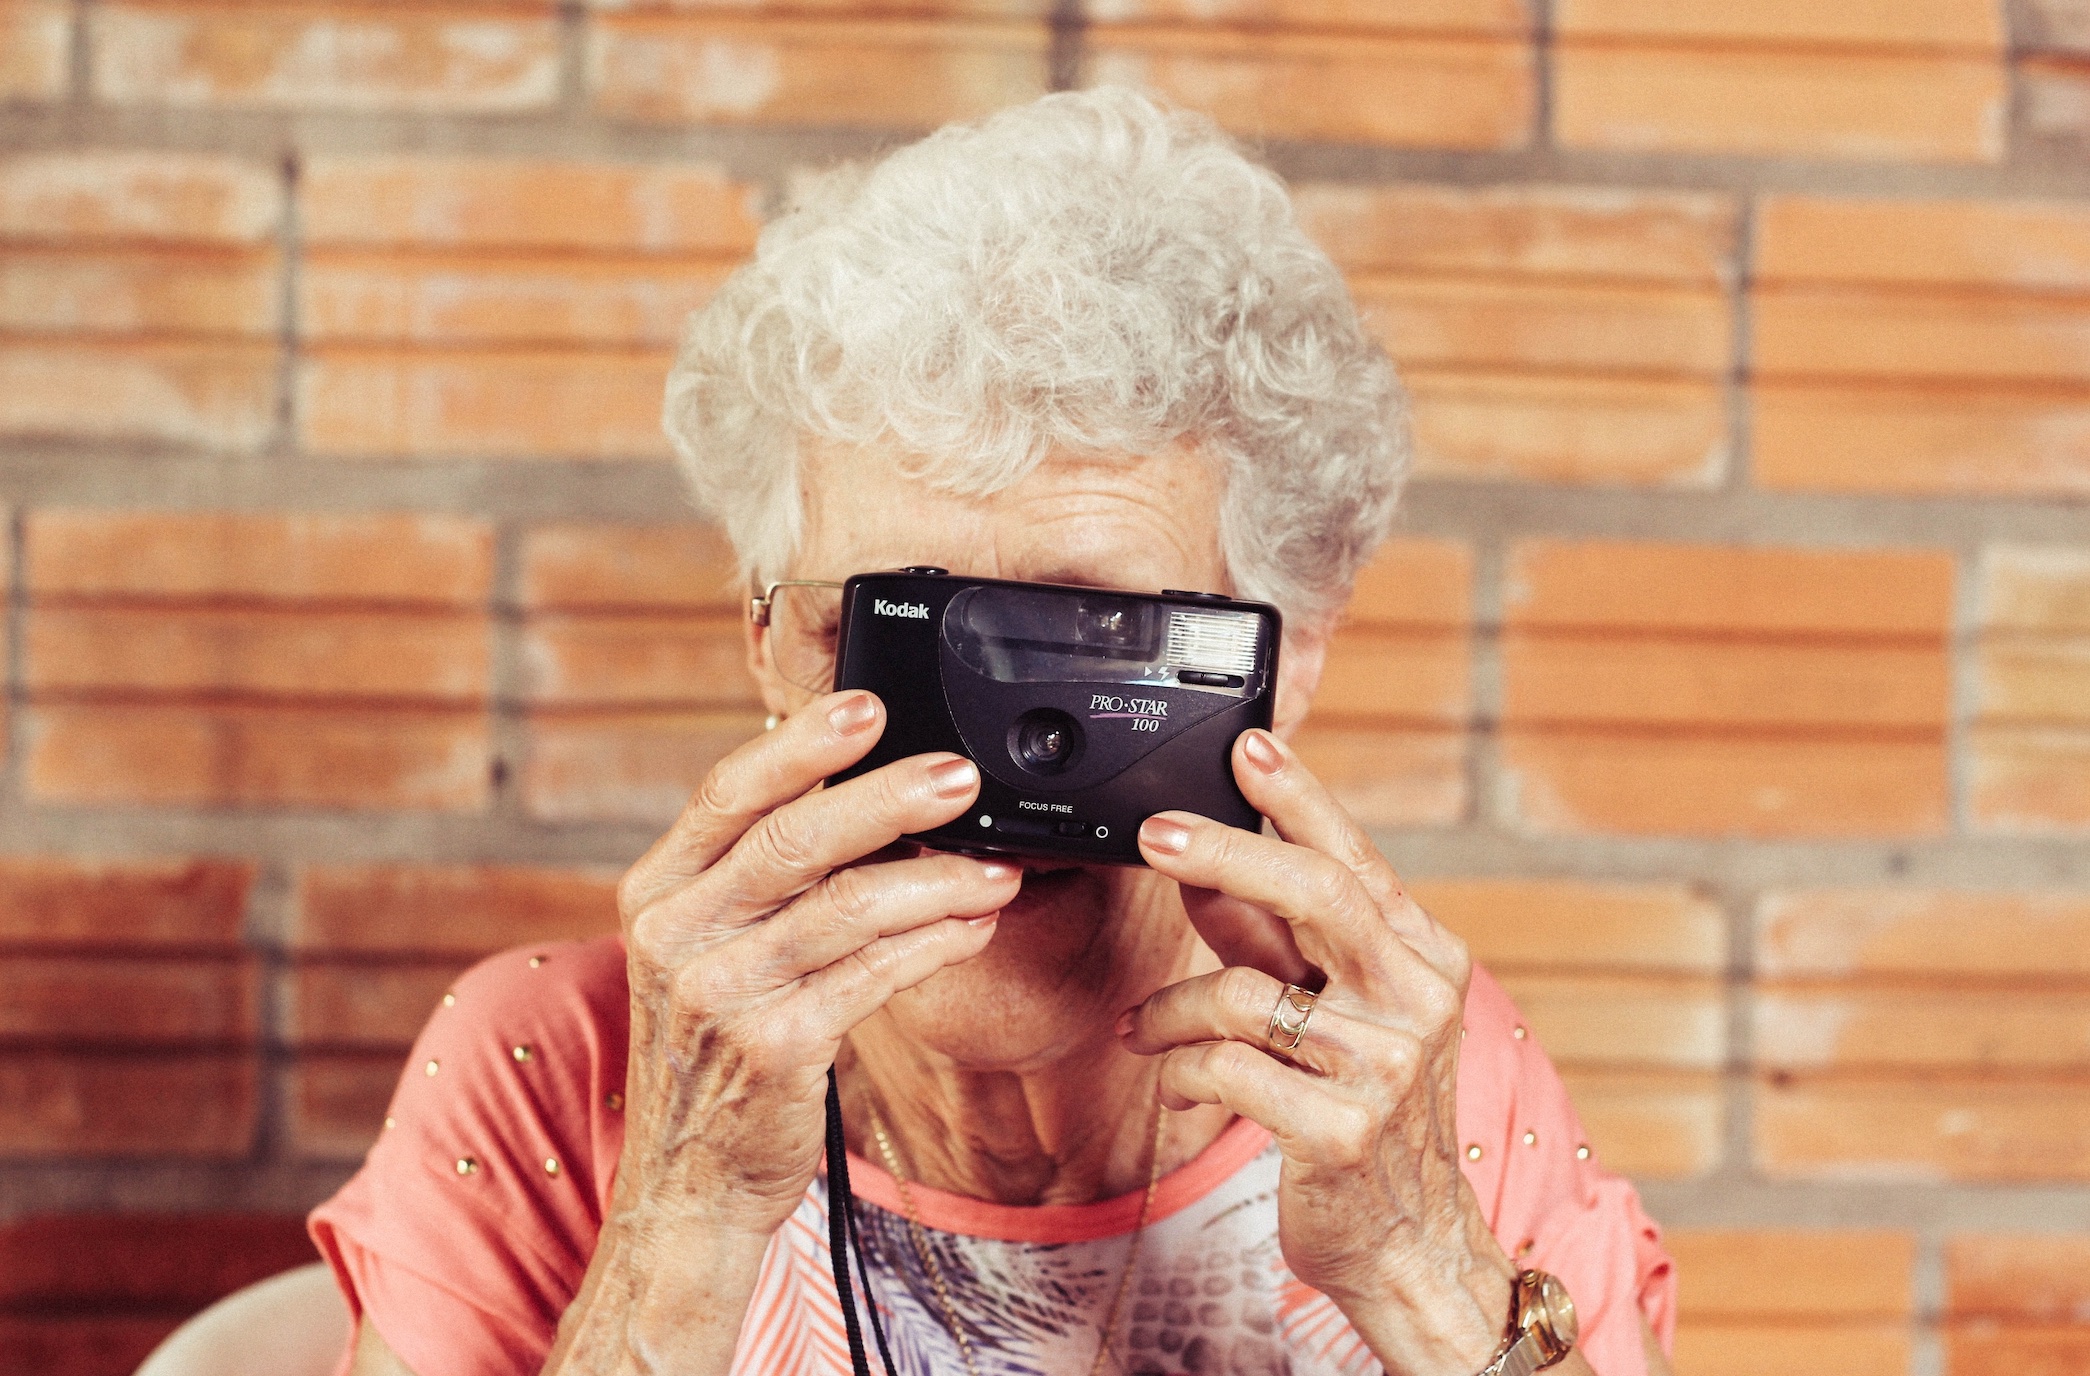 Elderly woman taking picture with camera; image by Tiago Muraro, via Unsplash.com.